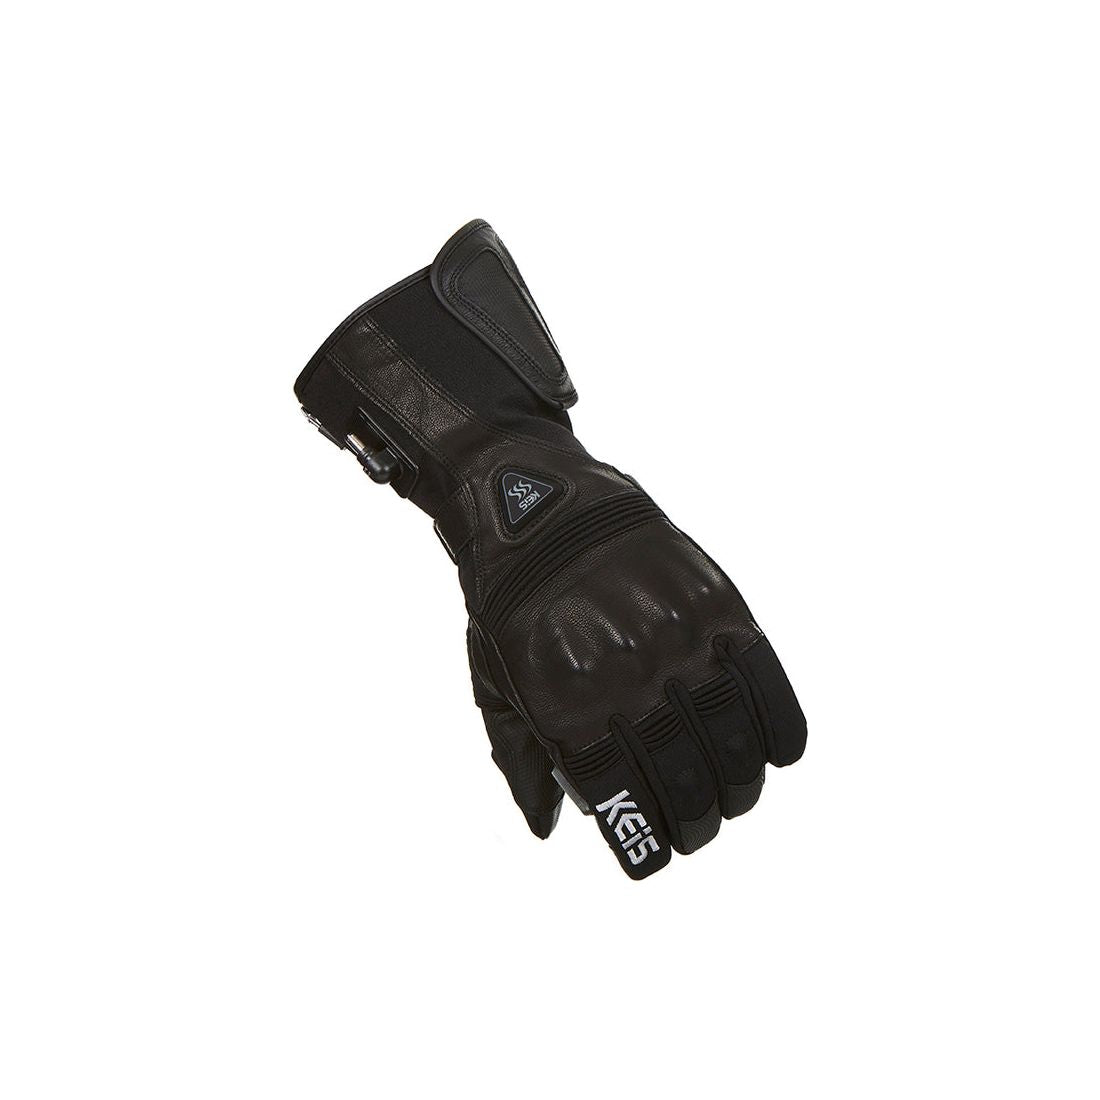 Keis G601 Premium Heated Touring Glove